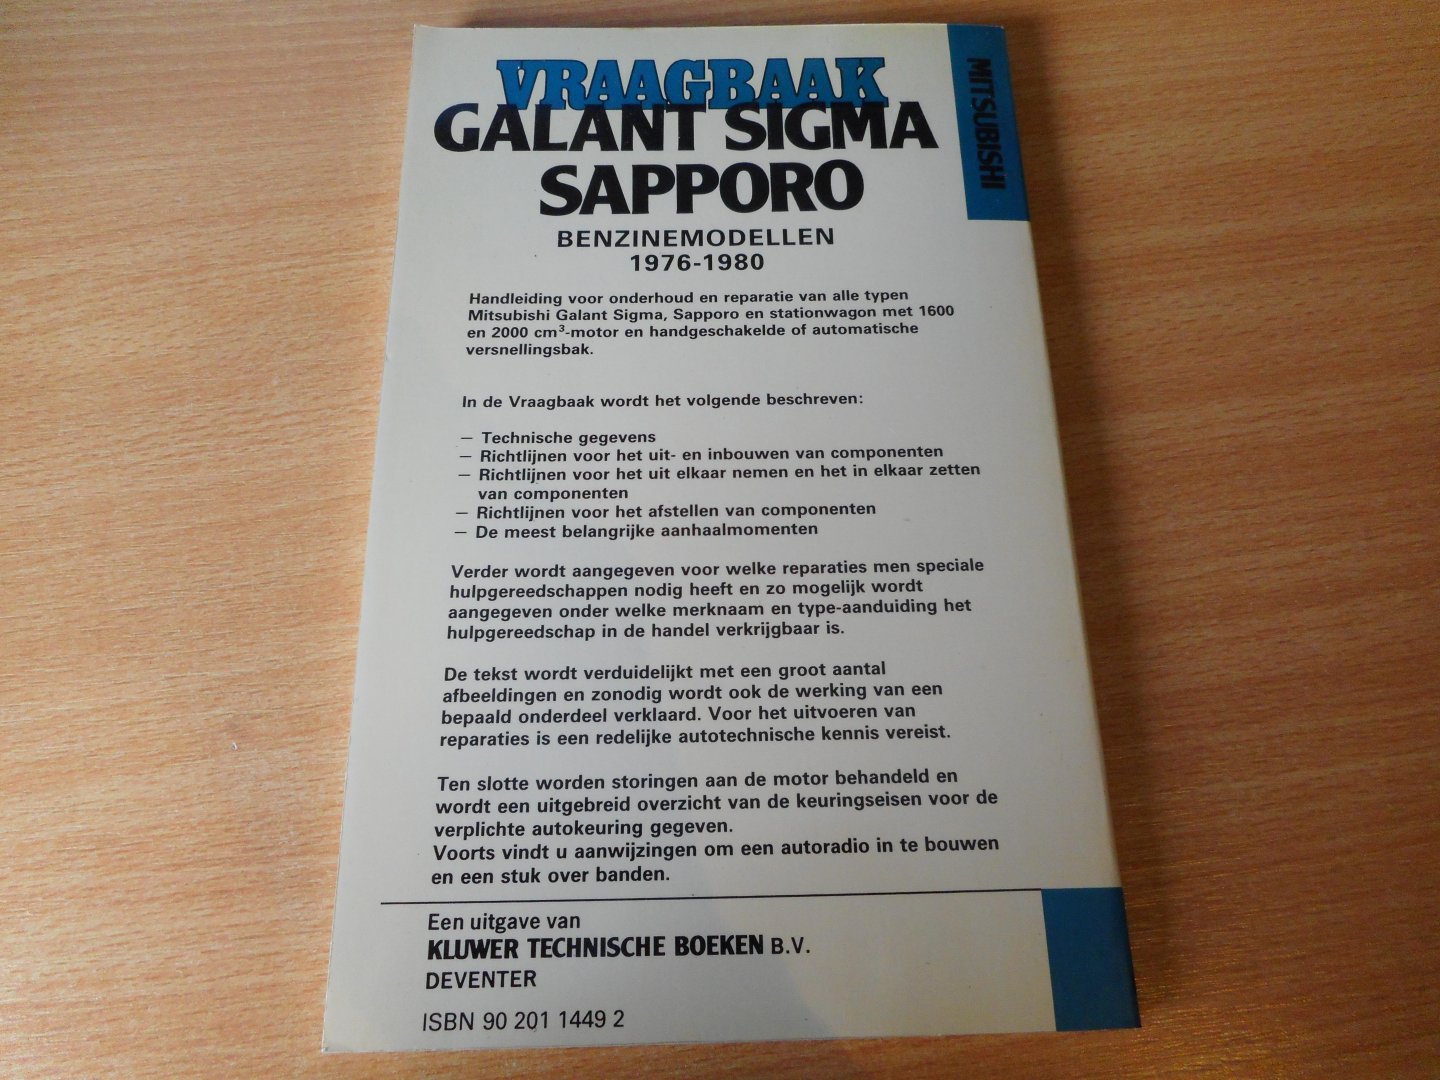 Olving, P.H. (red.) - Vraagbaak Galant Sigma Sapporo. Benzinemodellen 1976-1980.